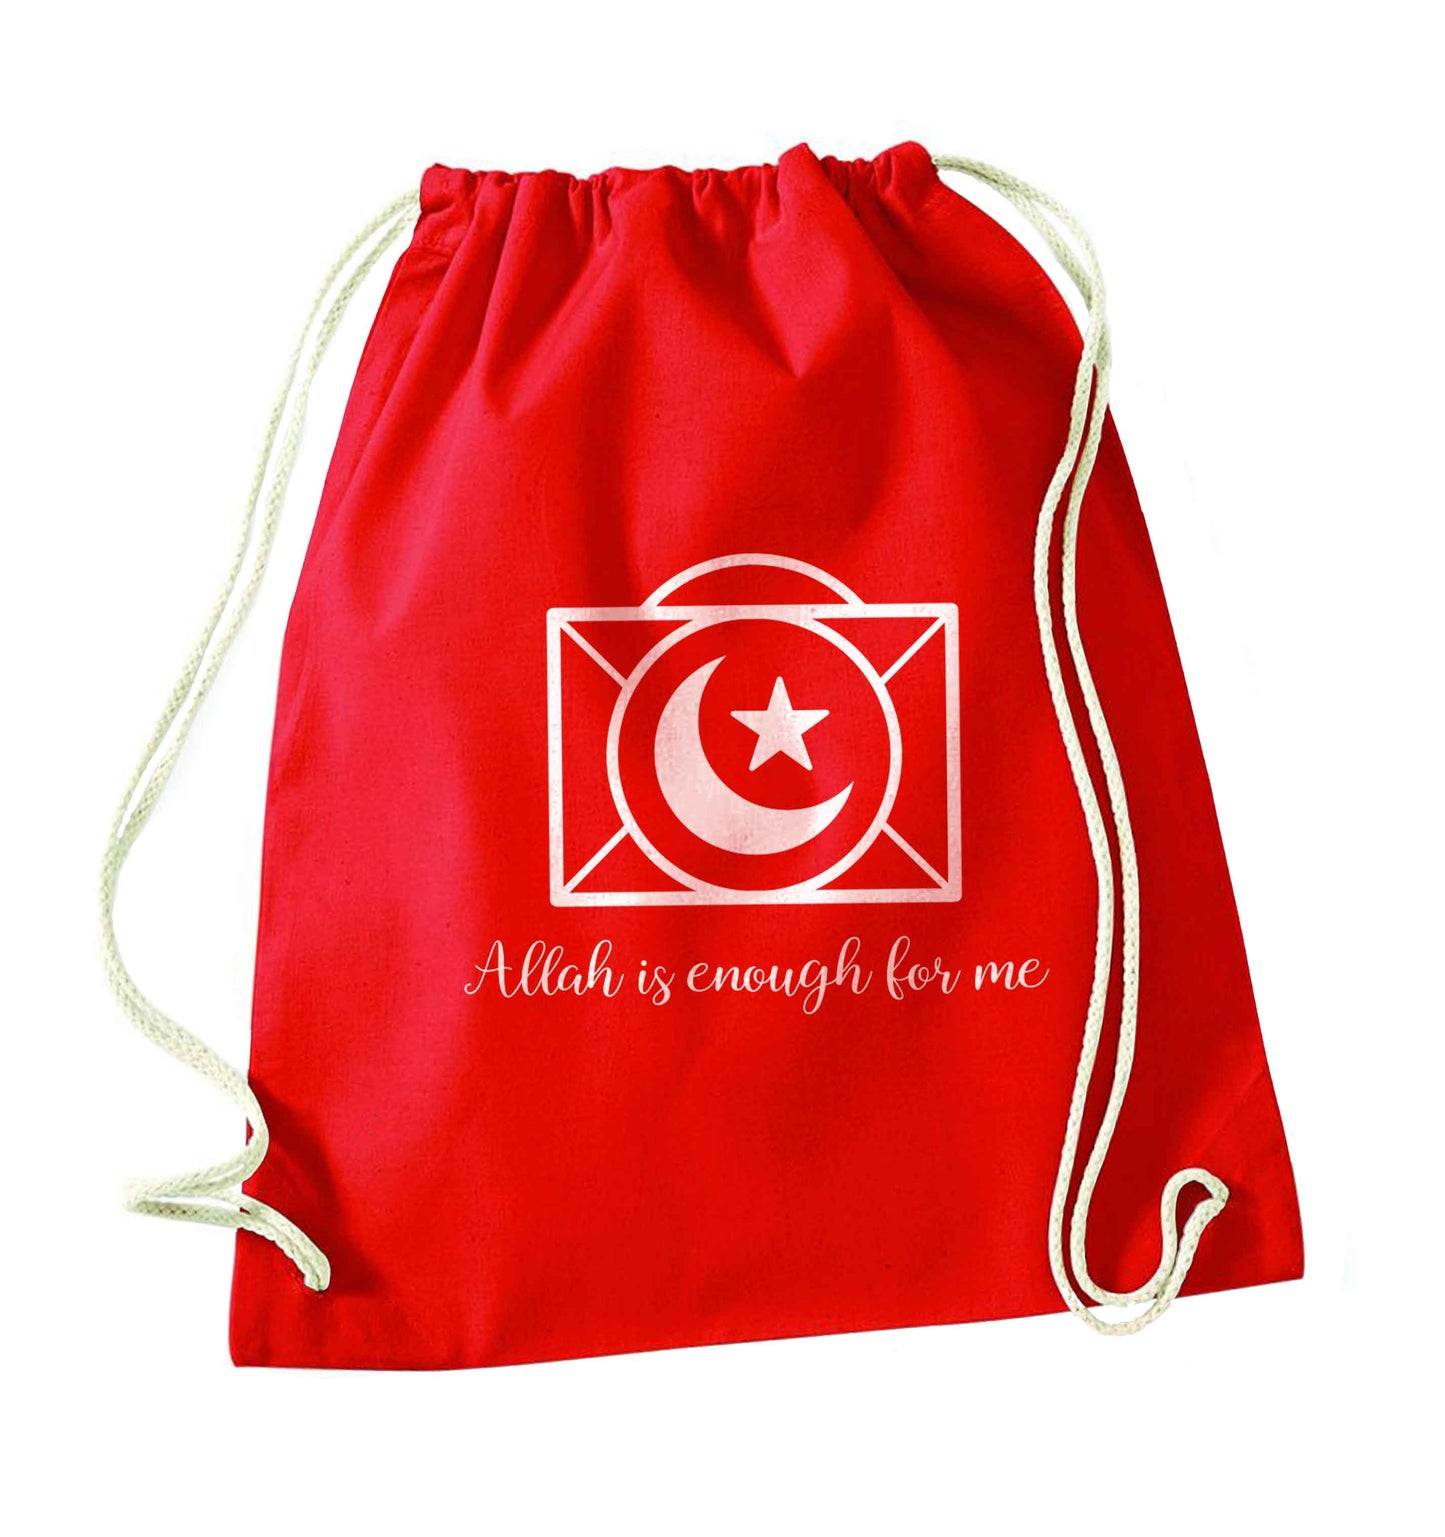 Allah is enough for me red drawstring bag 